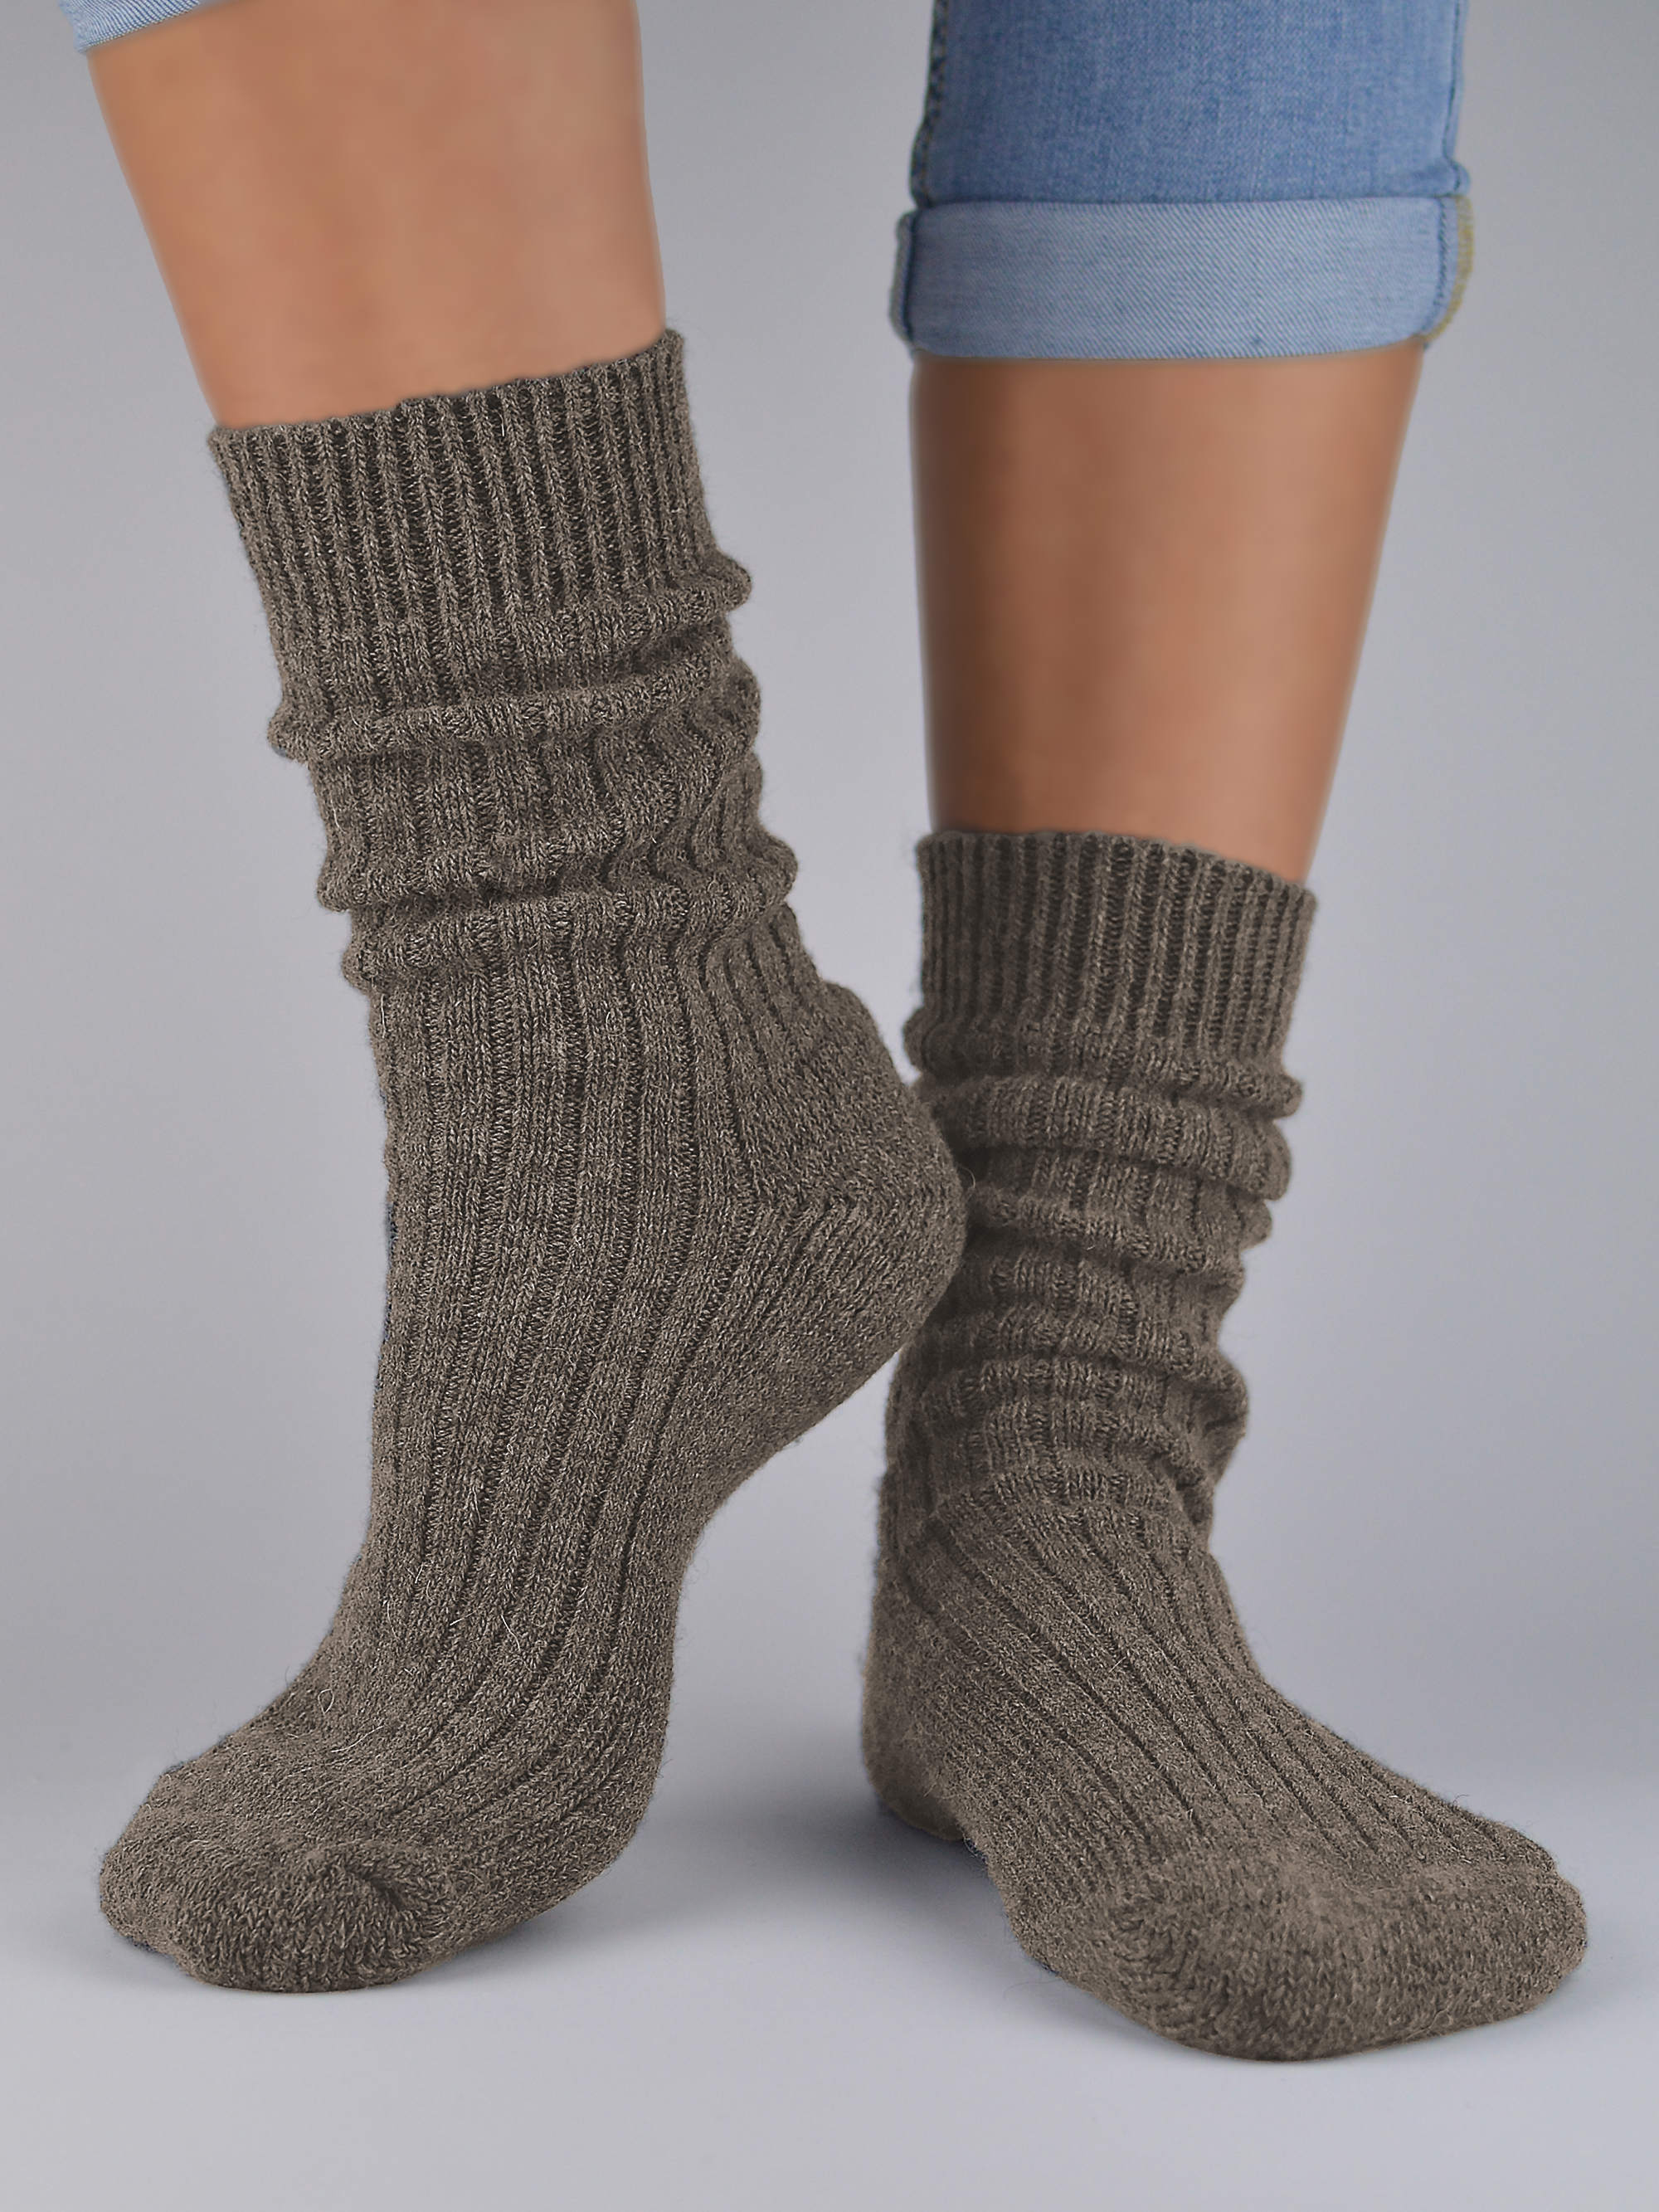 NOVITI Woman's Socks SW001-W-10